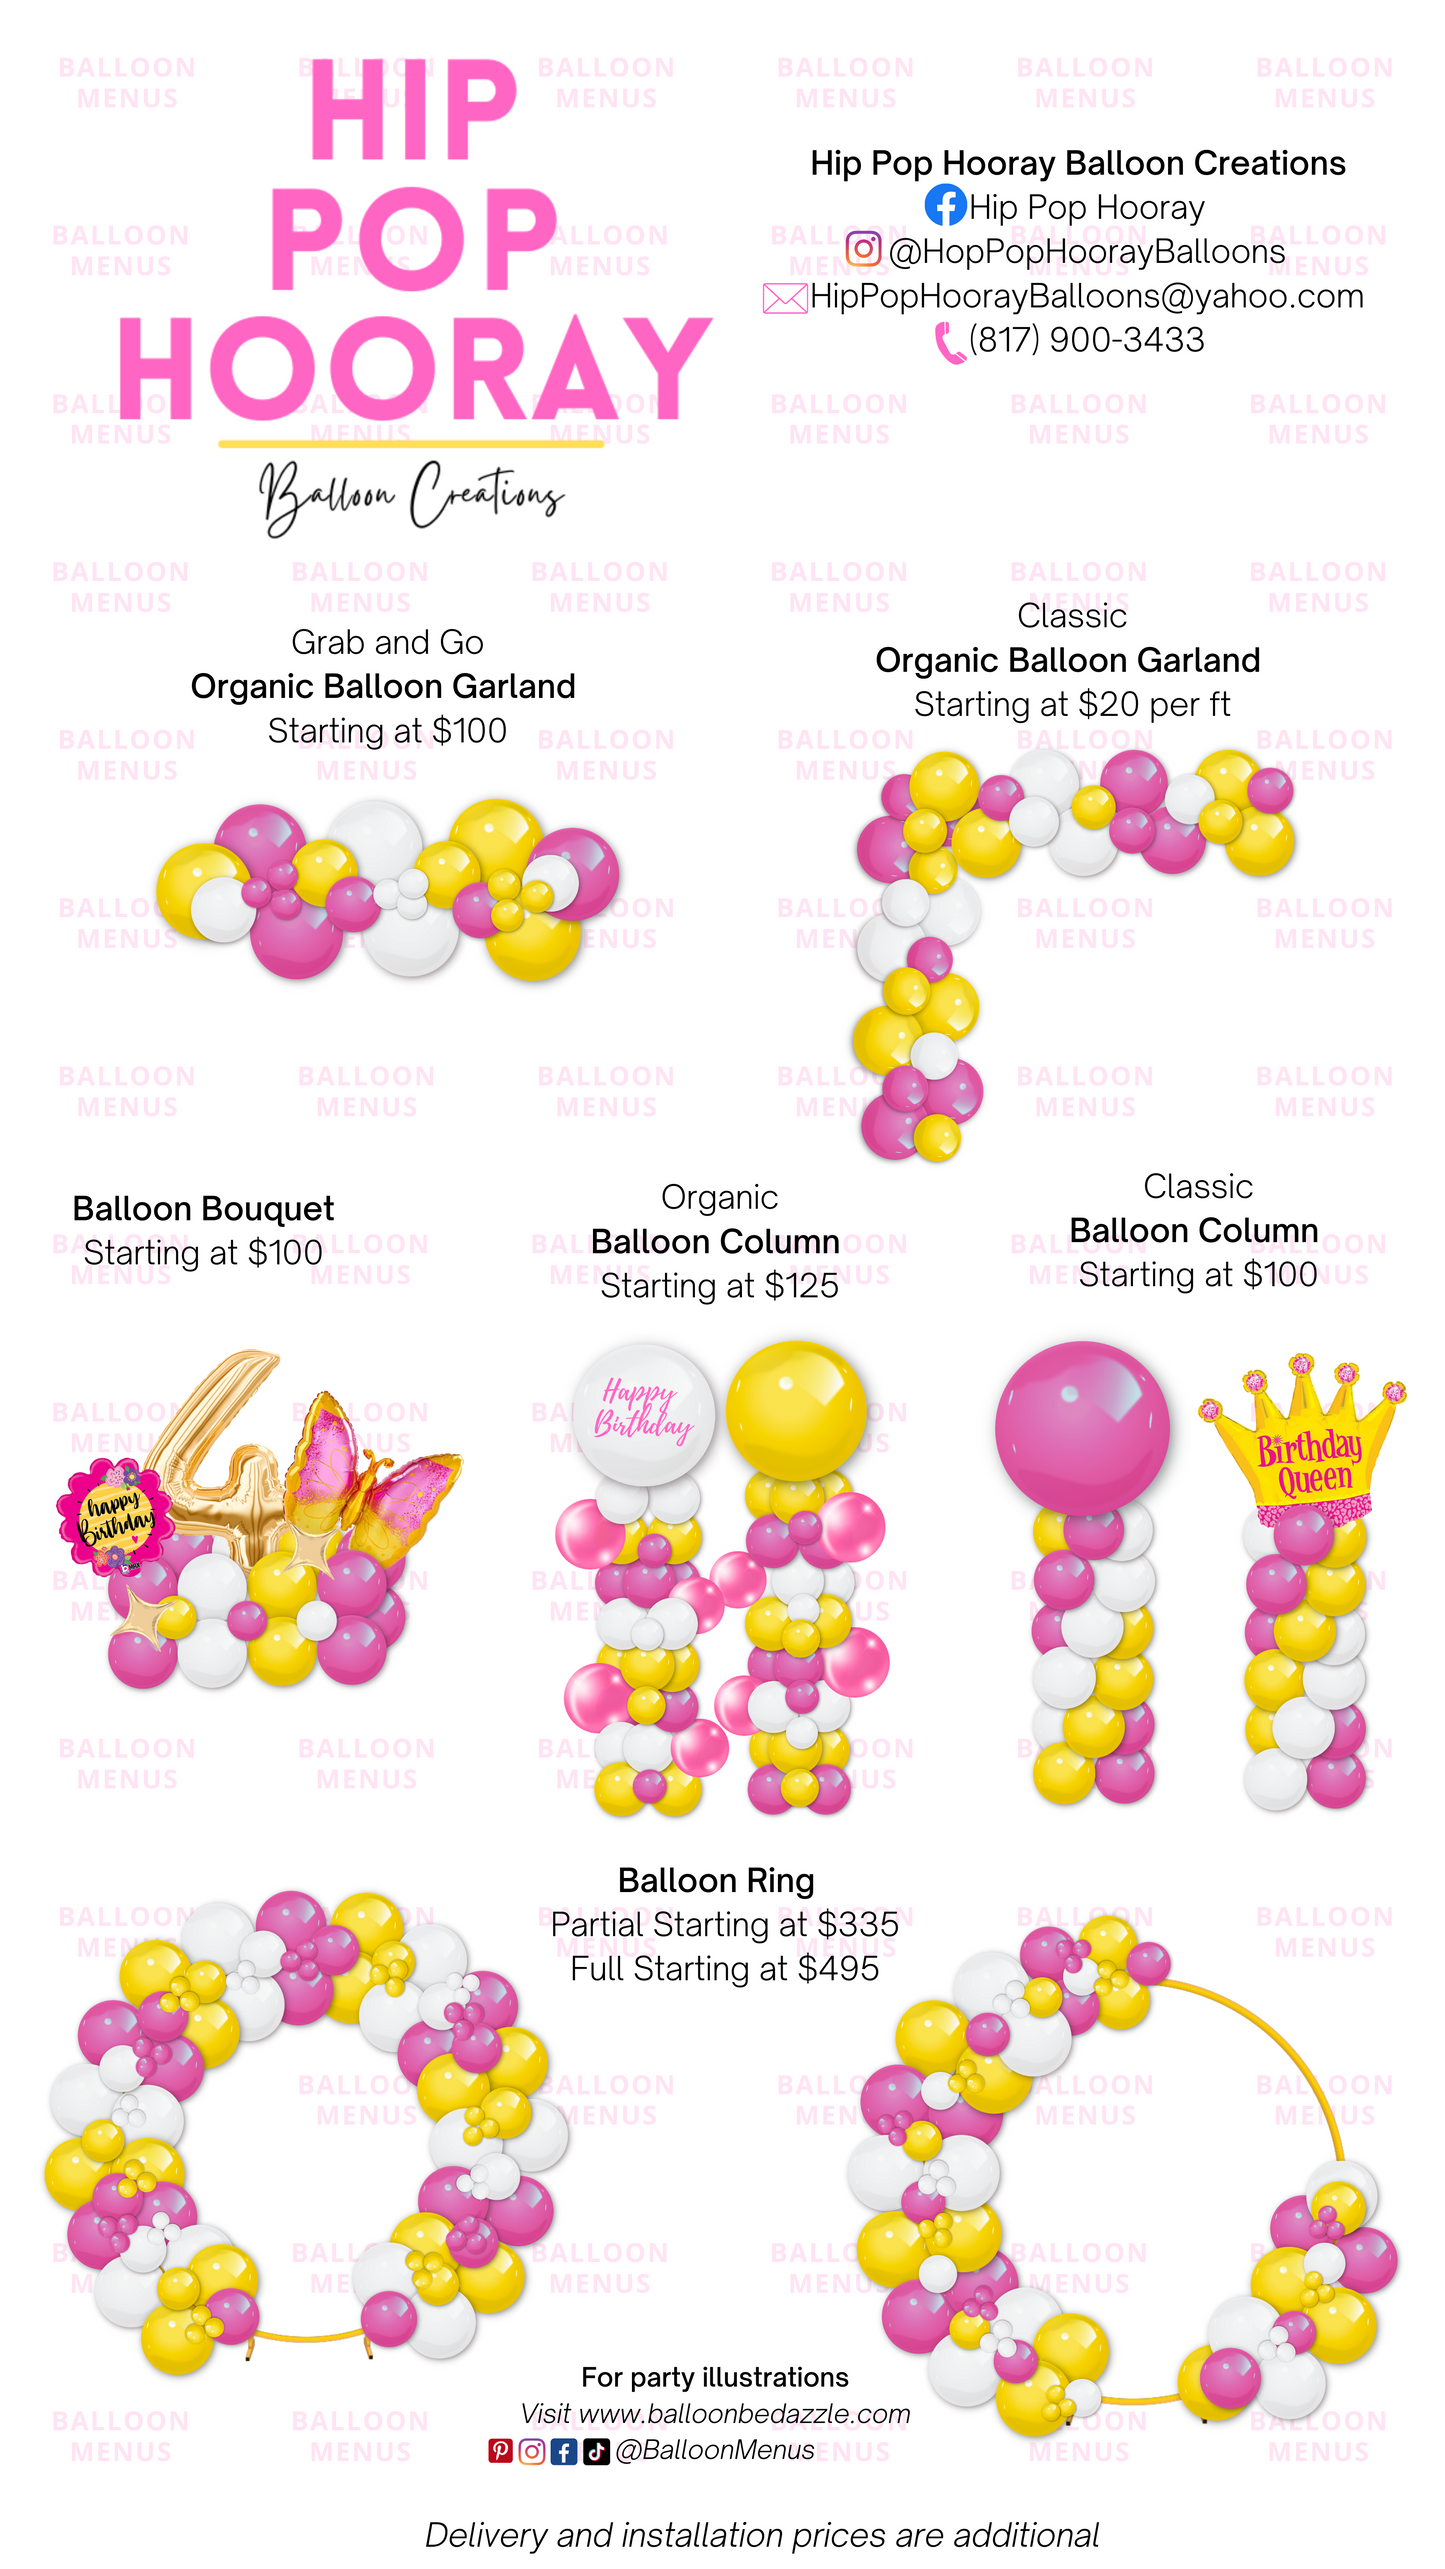 Hip Pop Hooray Balloon Creations - Client Balloon Menu